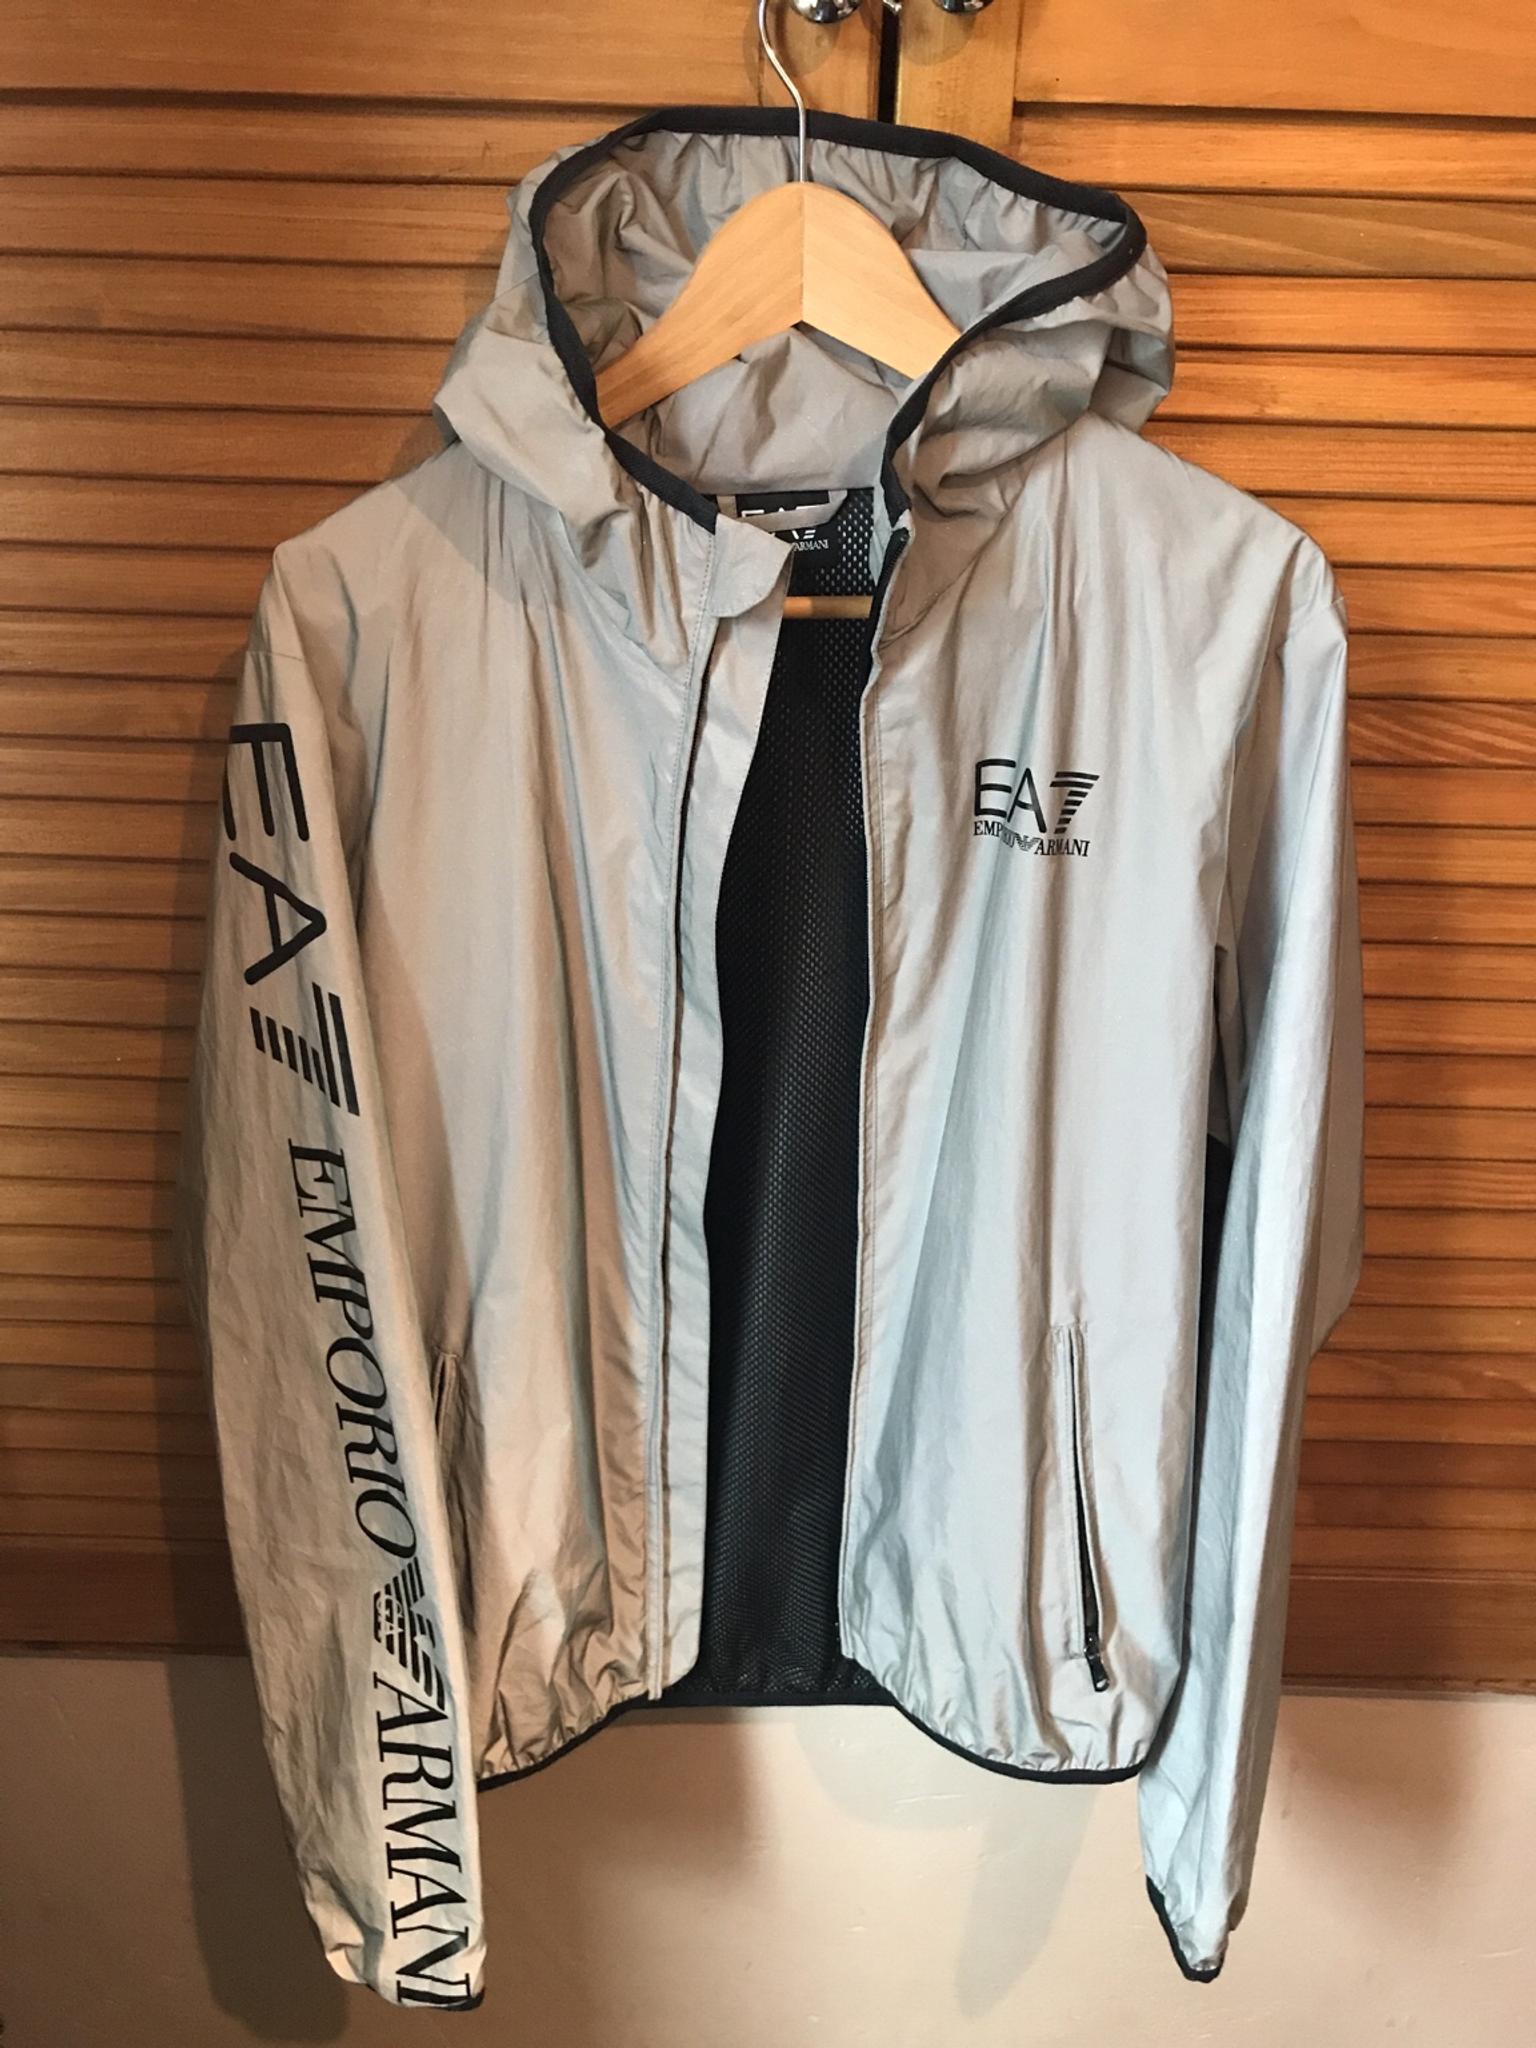 ea7 reflective jacket - 64% OFF - awi.com